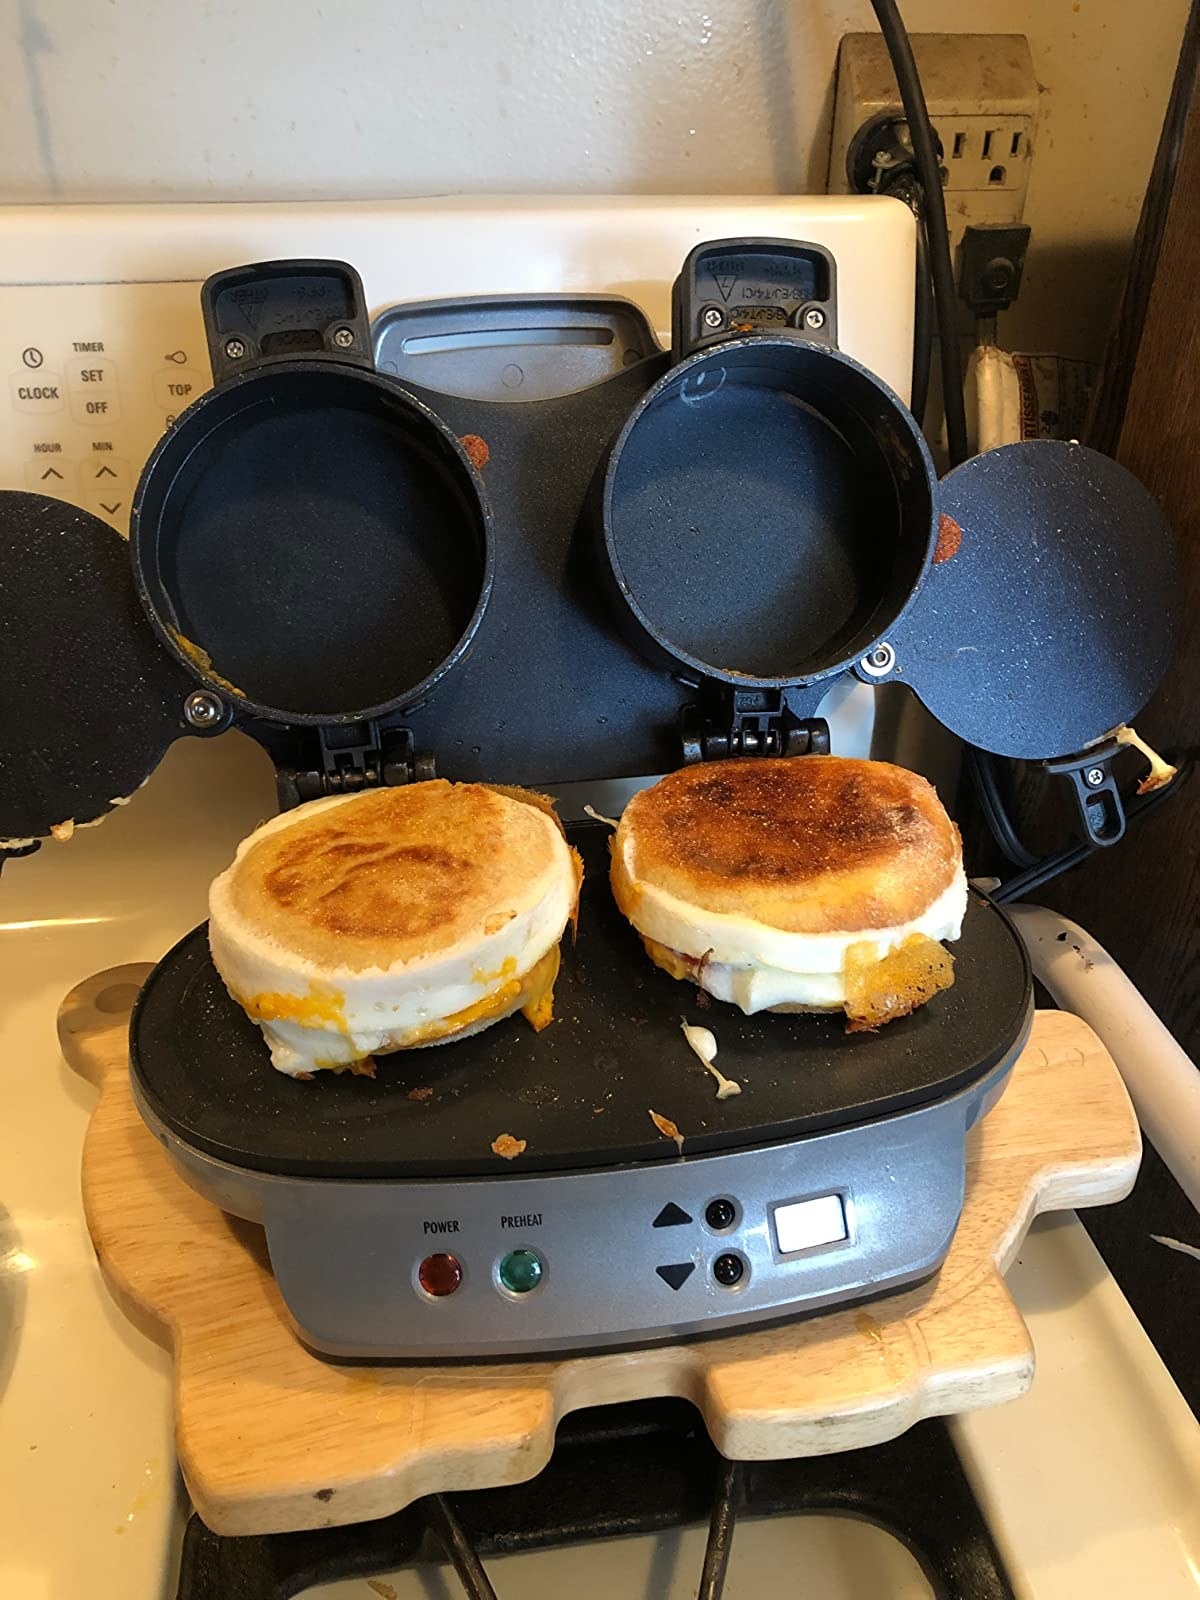 Reviewer image of breakfast sandwiches in sandwich maker